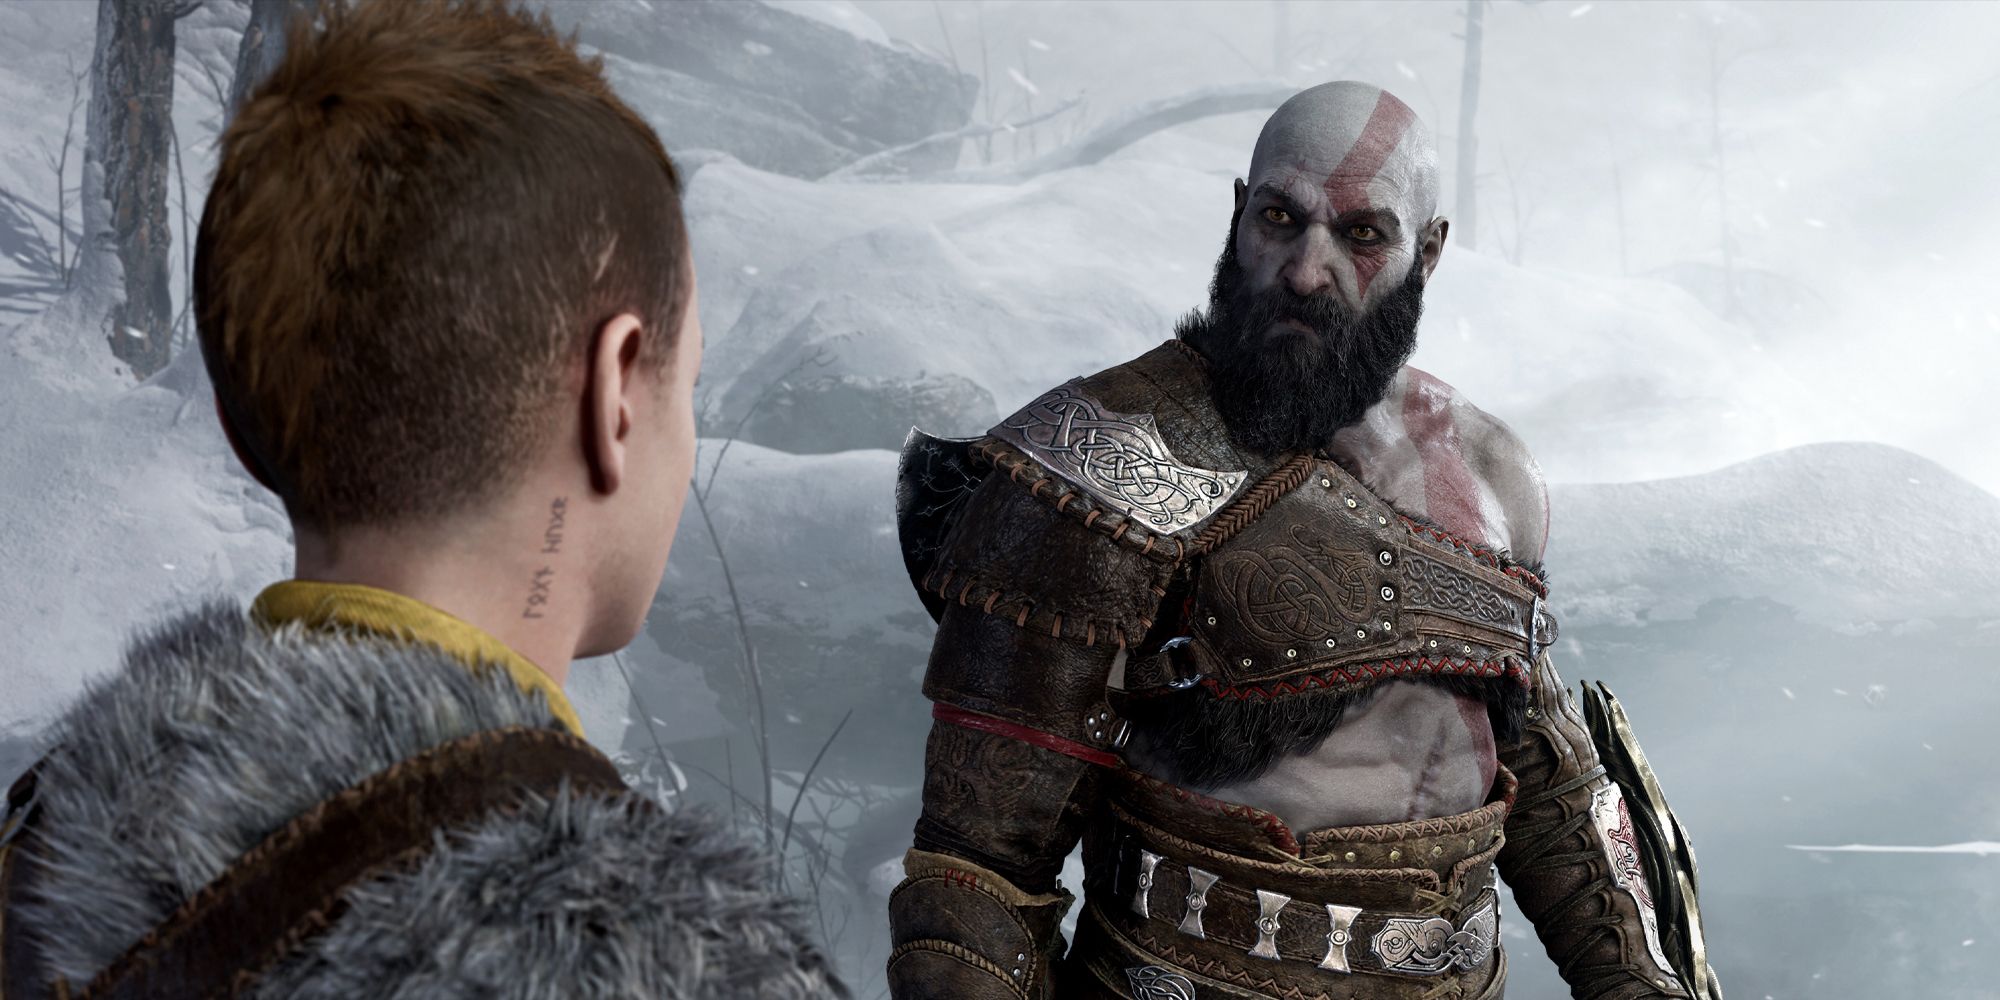 Kratos scolding Atreus in God of War Ragnarök